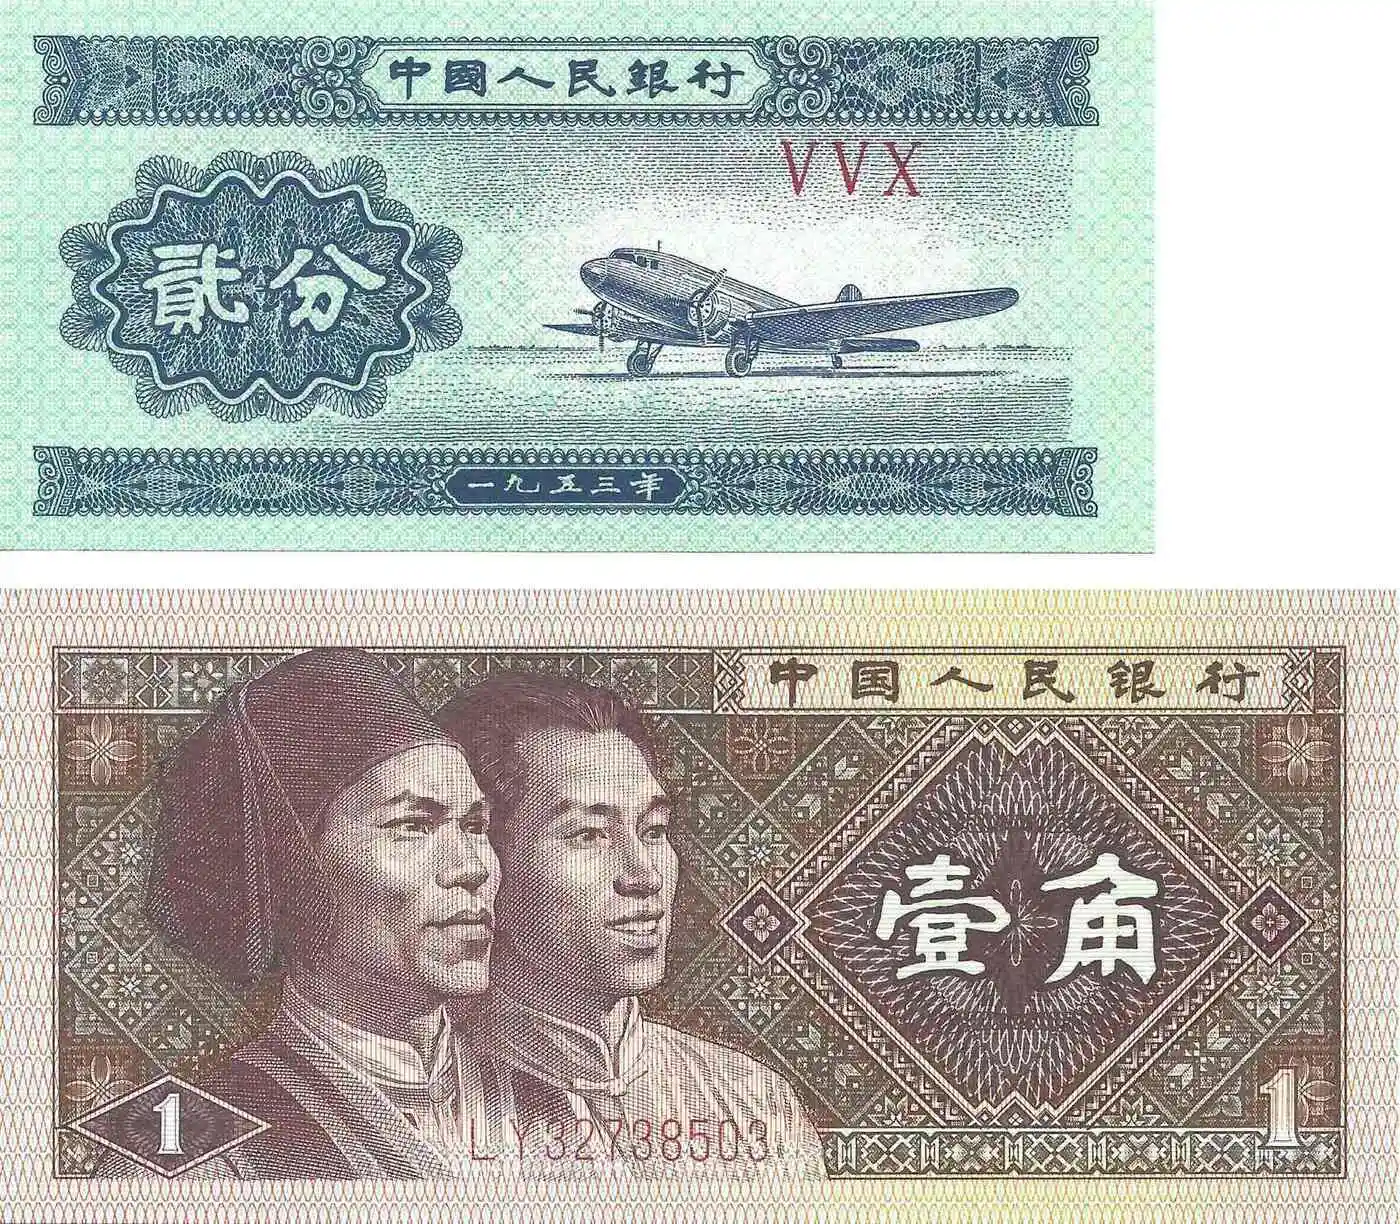 200 000 юаней. Китай 1 юань. Китайская банкнота 1 юань. Валюта Китая юань Дзяо. Китай 1 юань Китай банкнота.